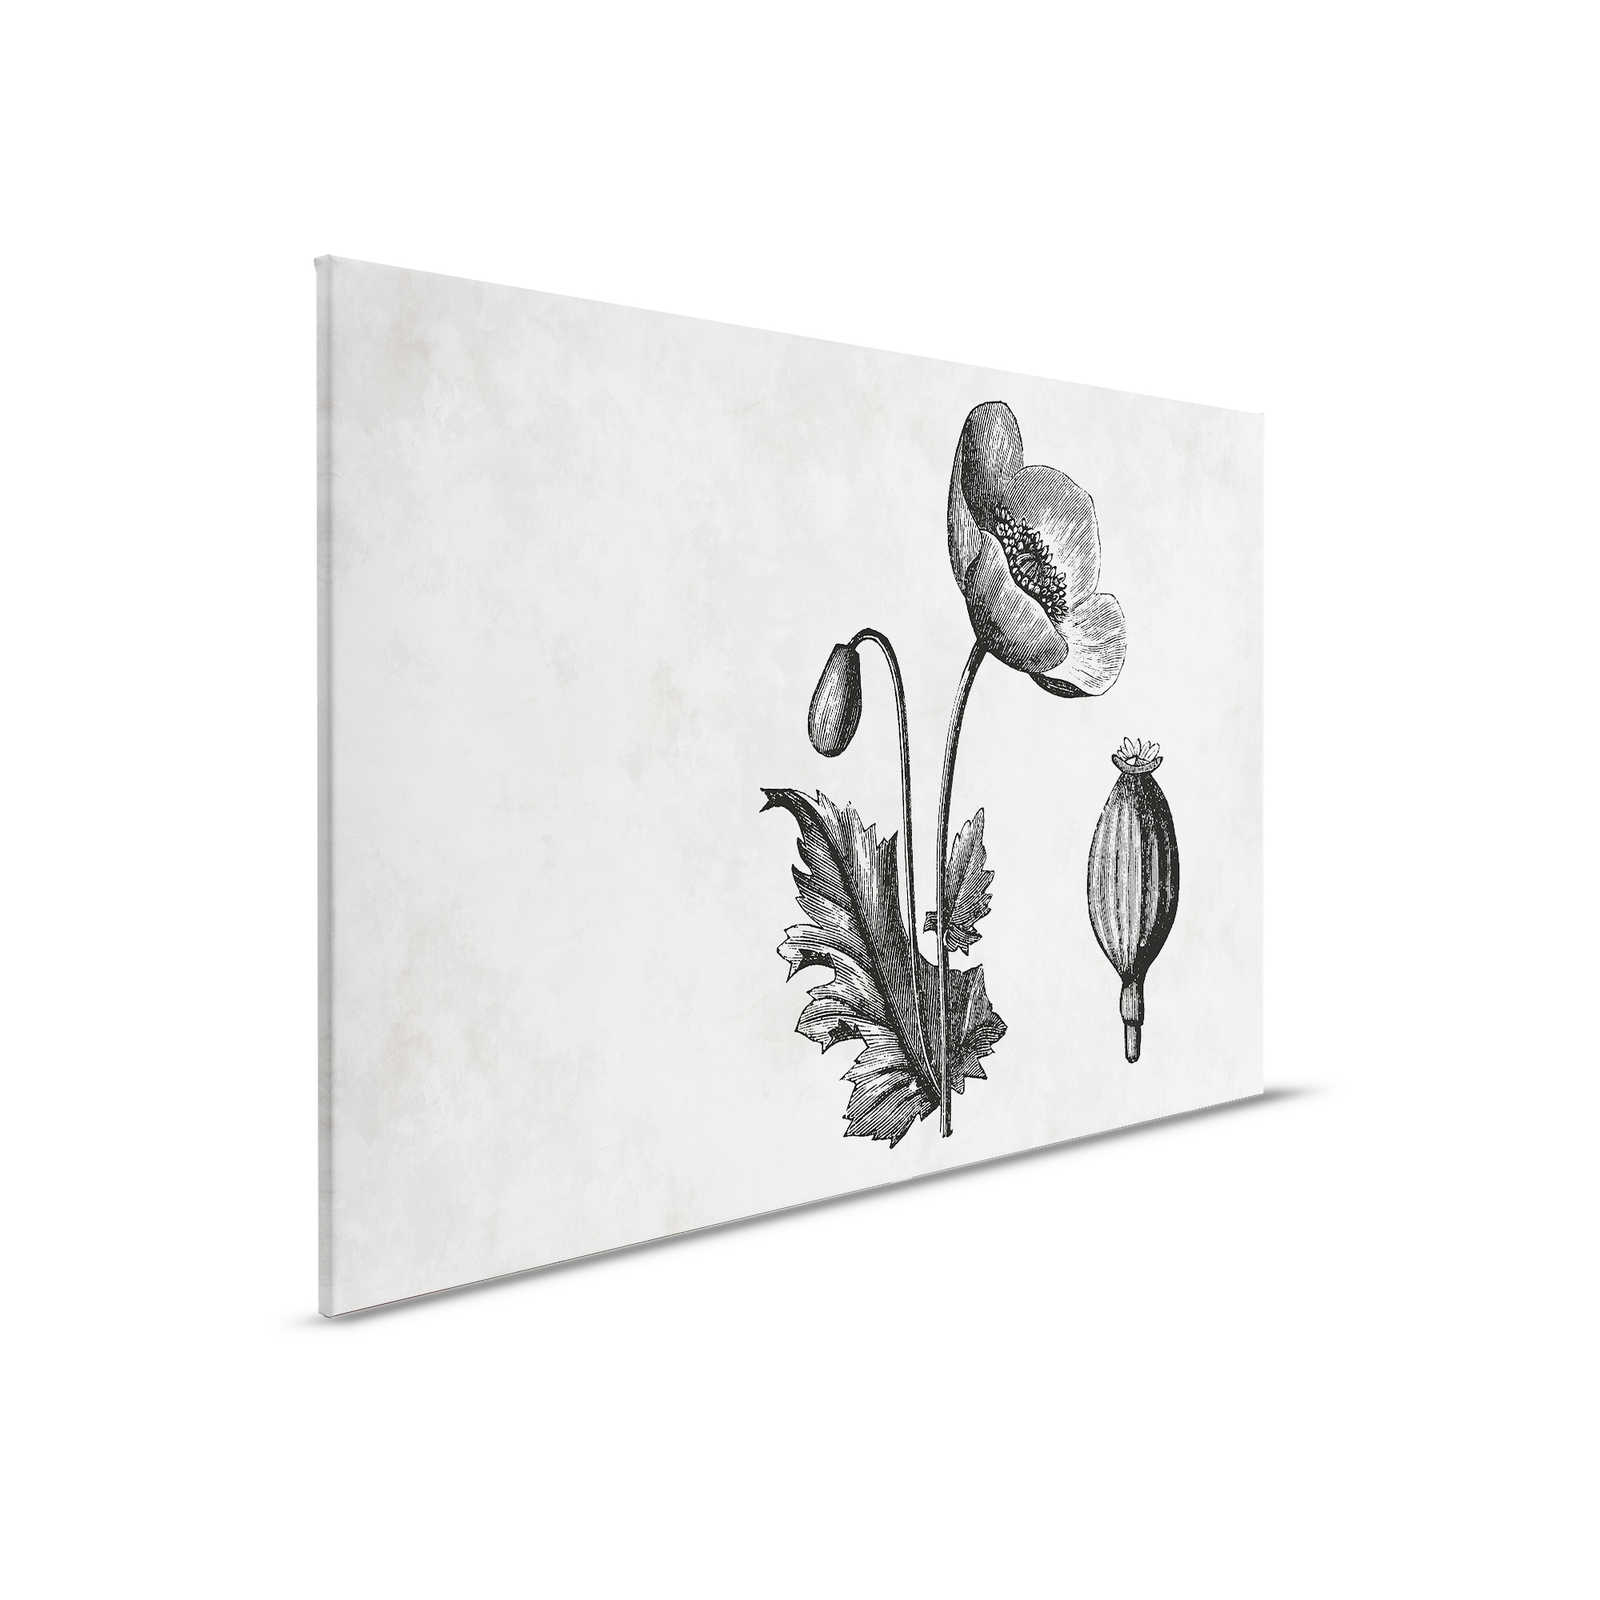 Schwarz-Weißes Leinwandbild Mohnblume Botanical Style – 0,90 m x 0,60 m
